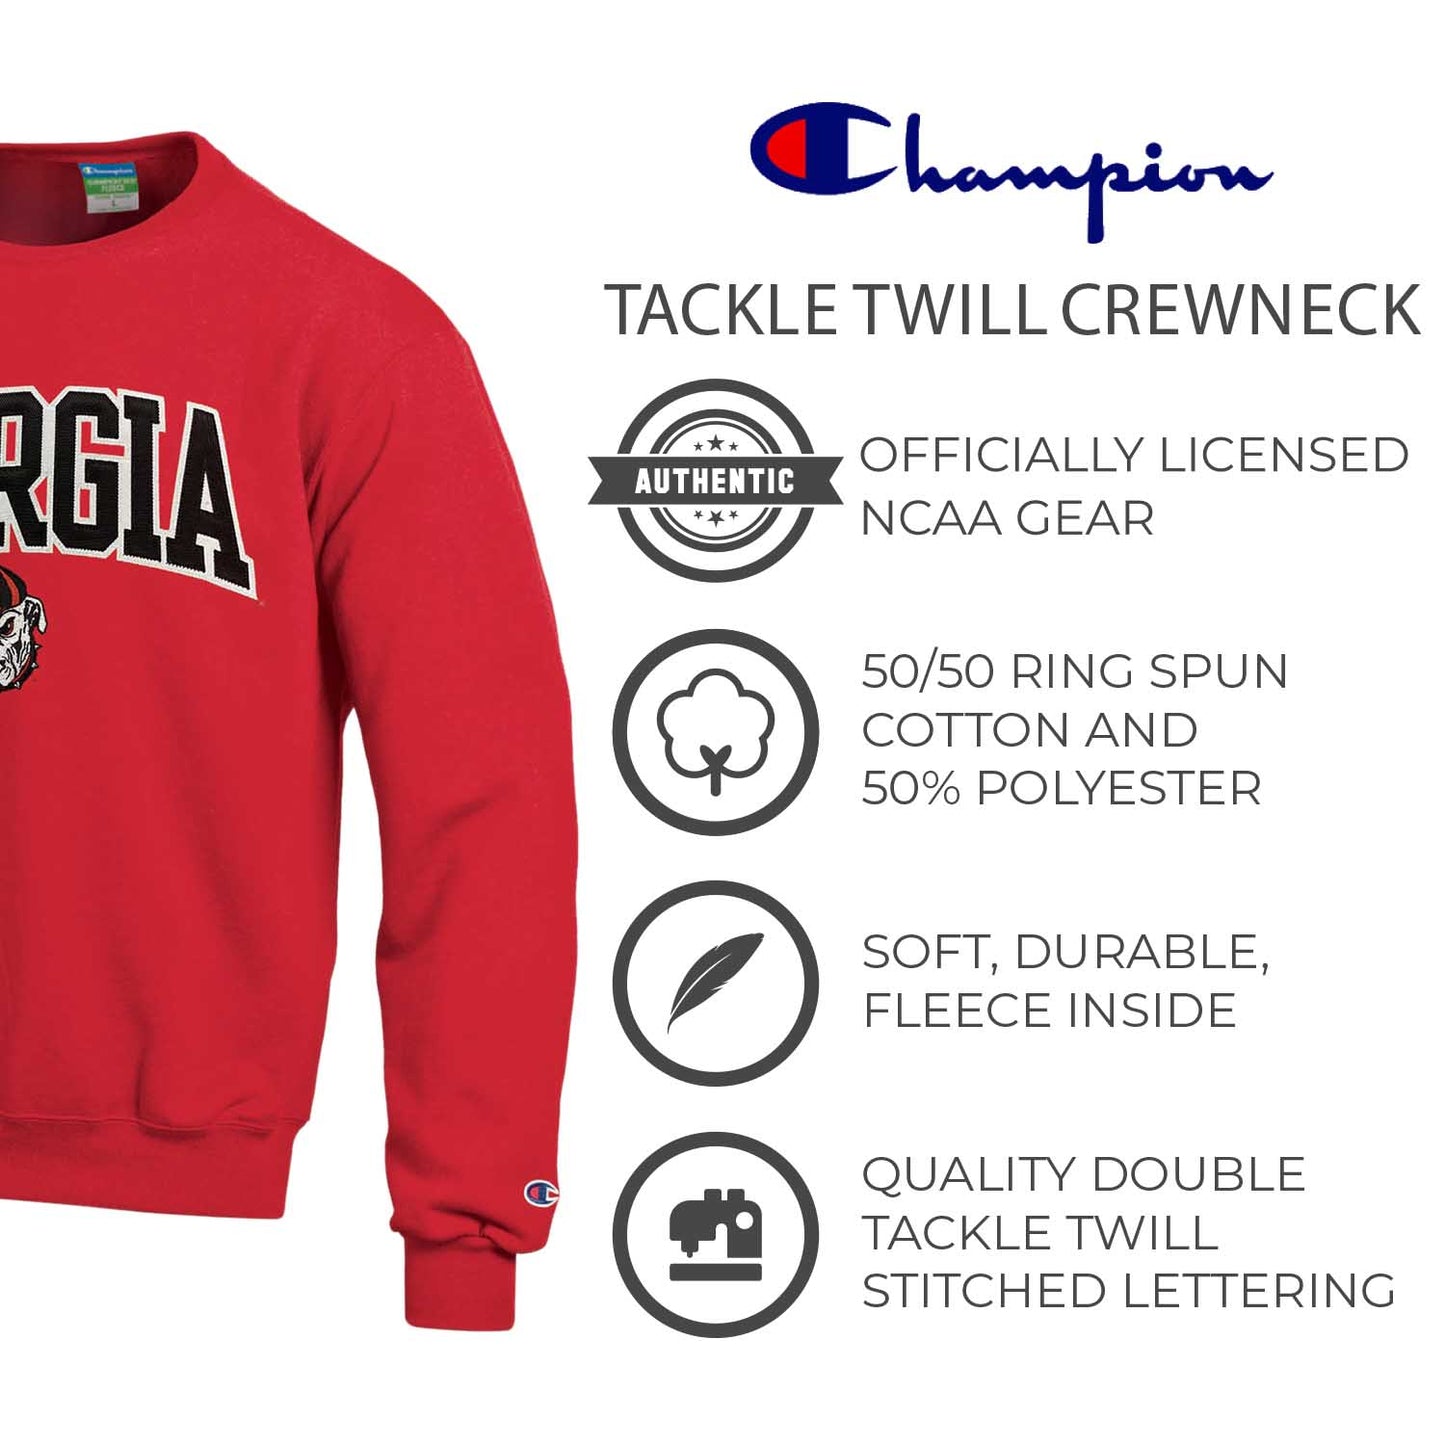 Georgia Bulldogs Adult Tackle Twill Crewneck - Red